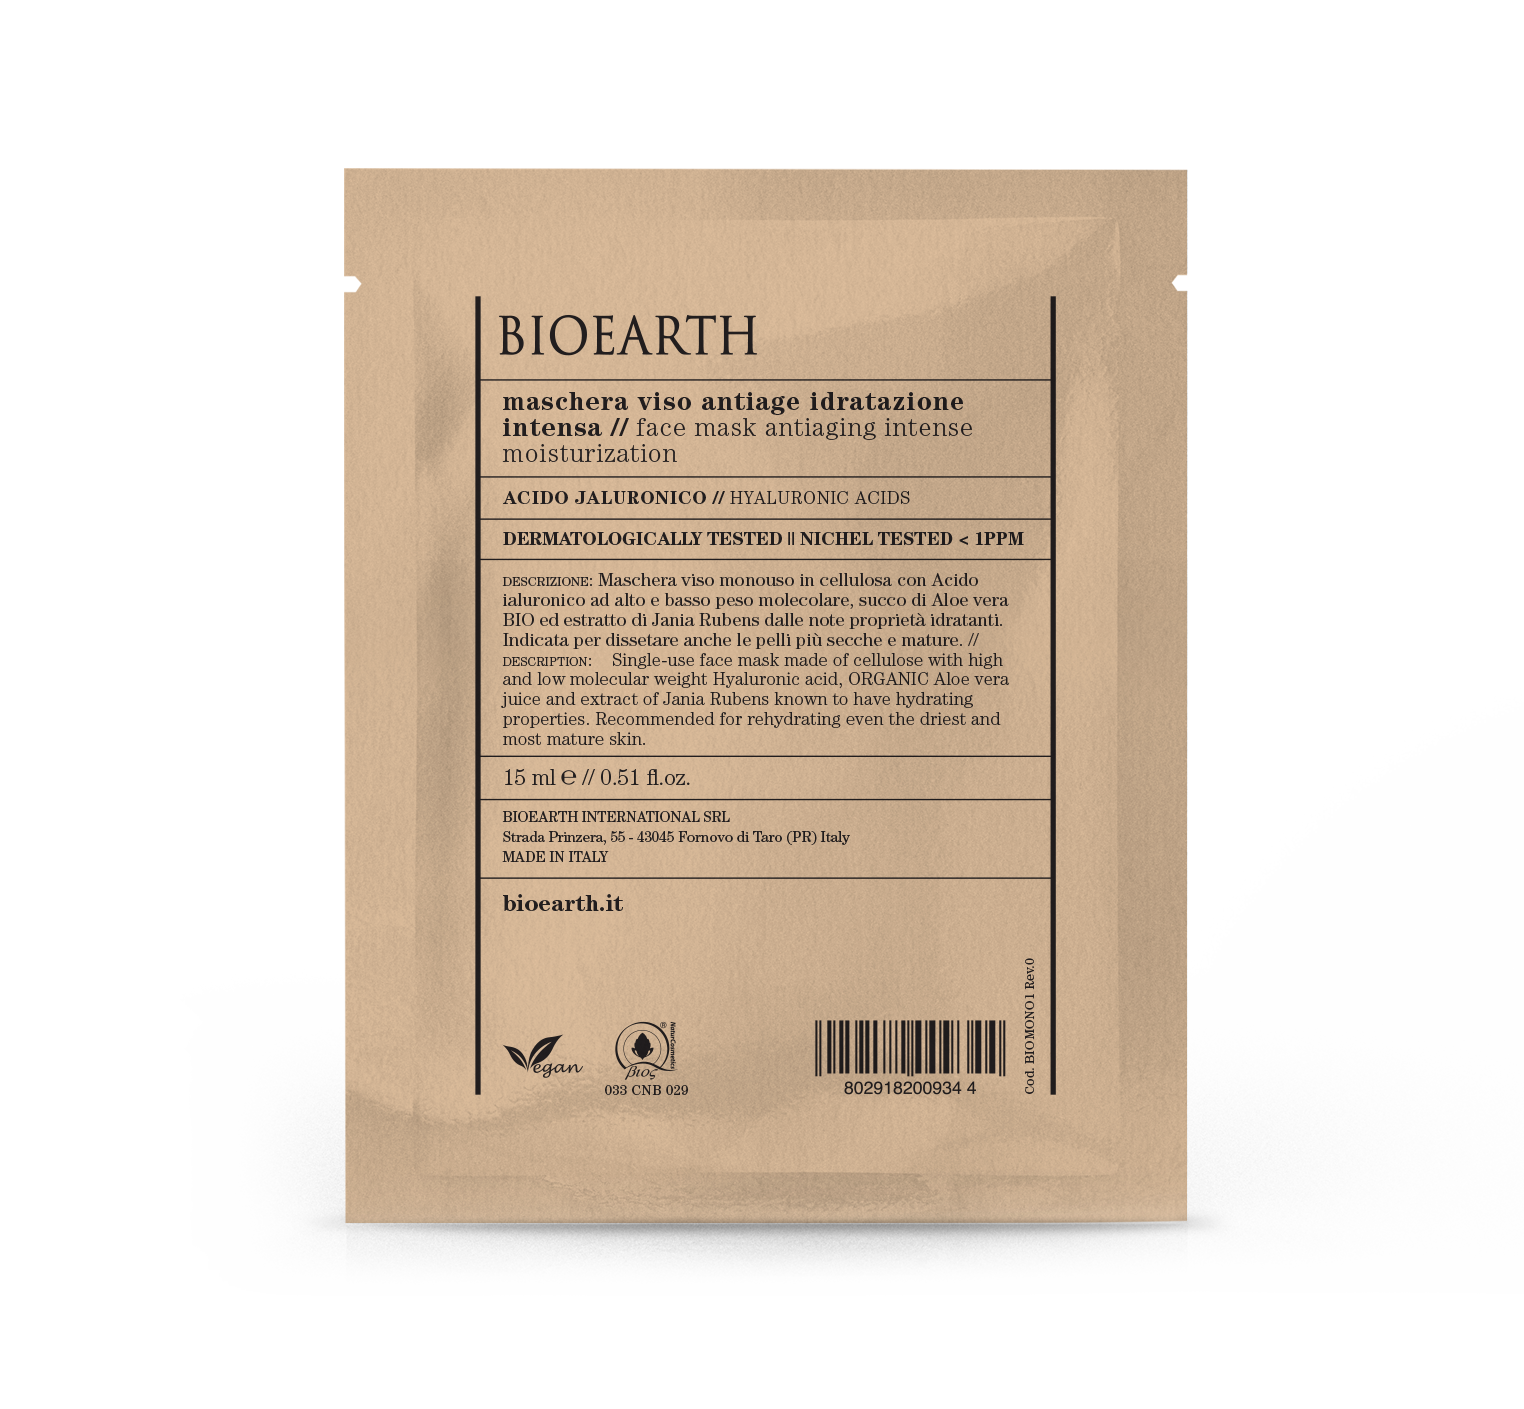 Bioearth Face mask antiaging intense moisturization - Hyaluronic acid